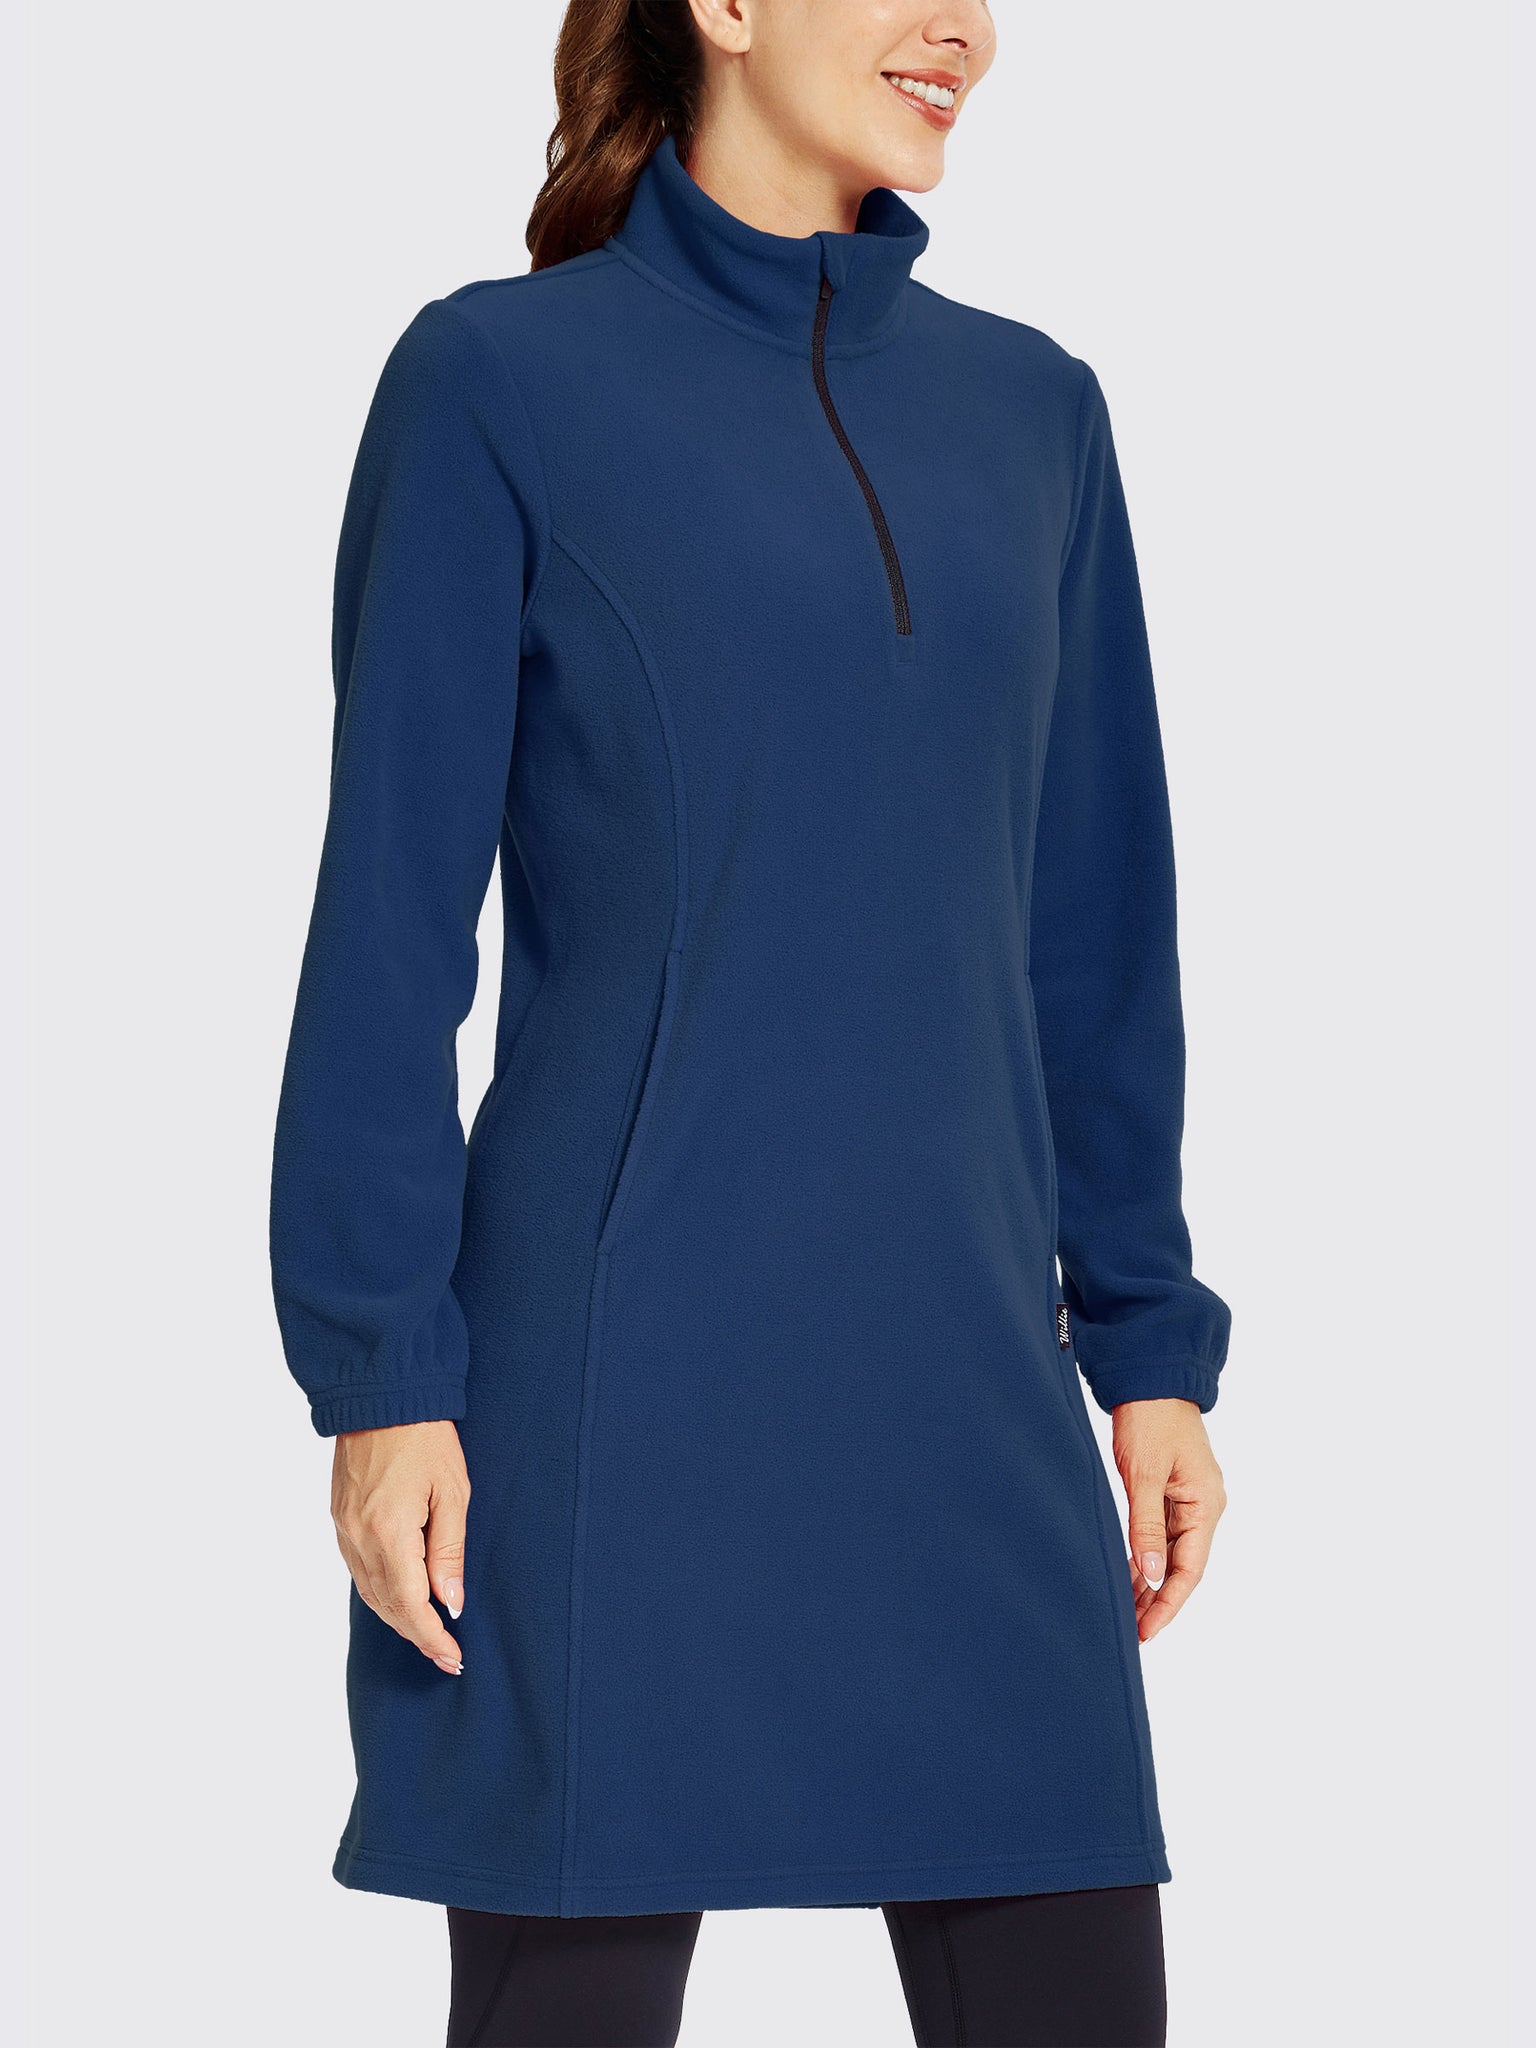 Women's Fleece Long-Sleeve Turtleneck Dress Navy1